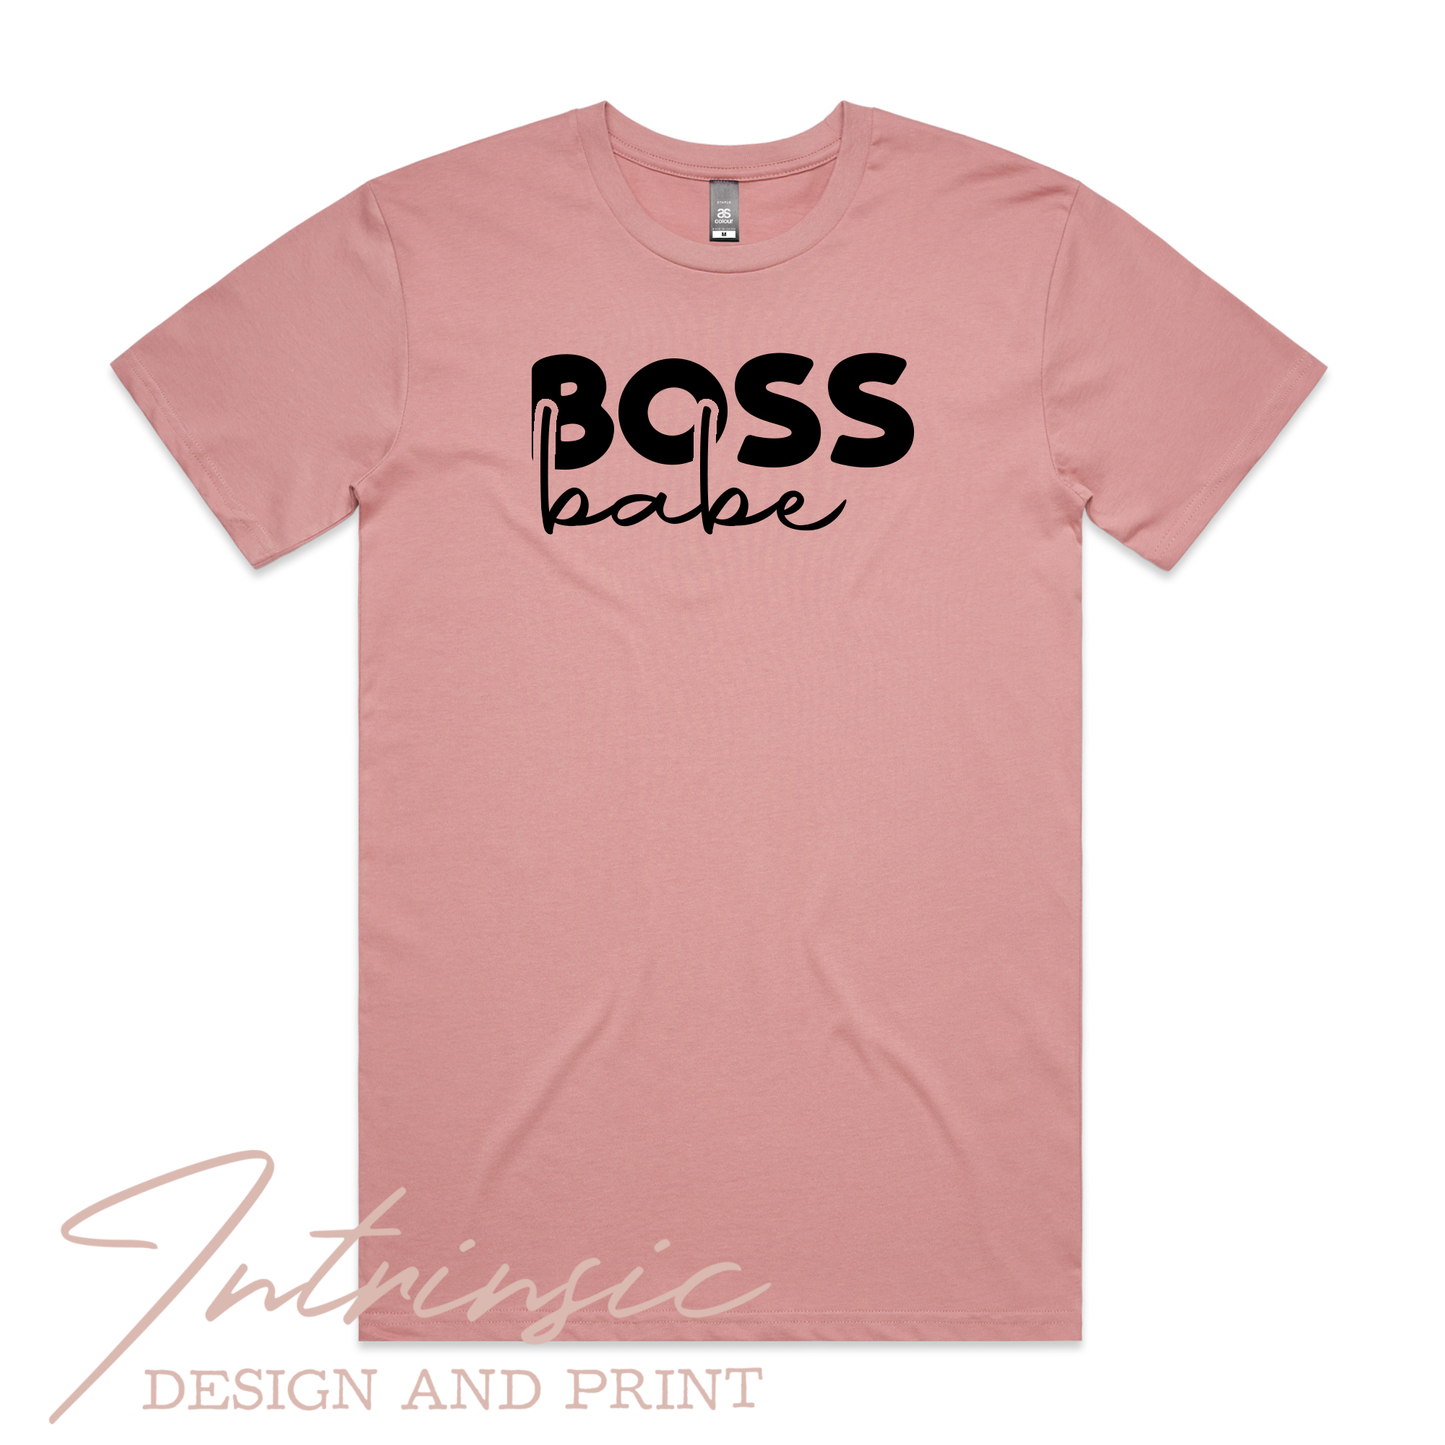 Boss babe - unisex